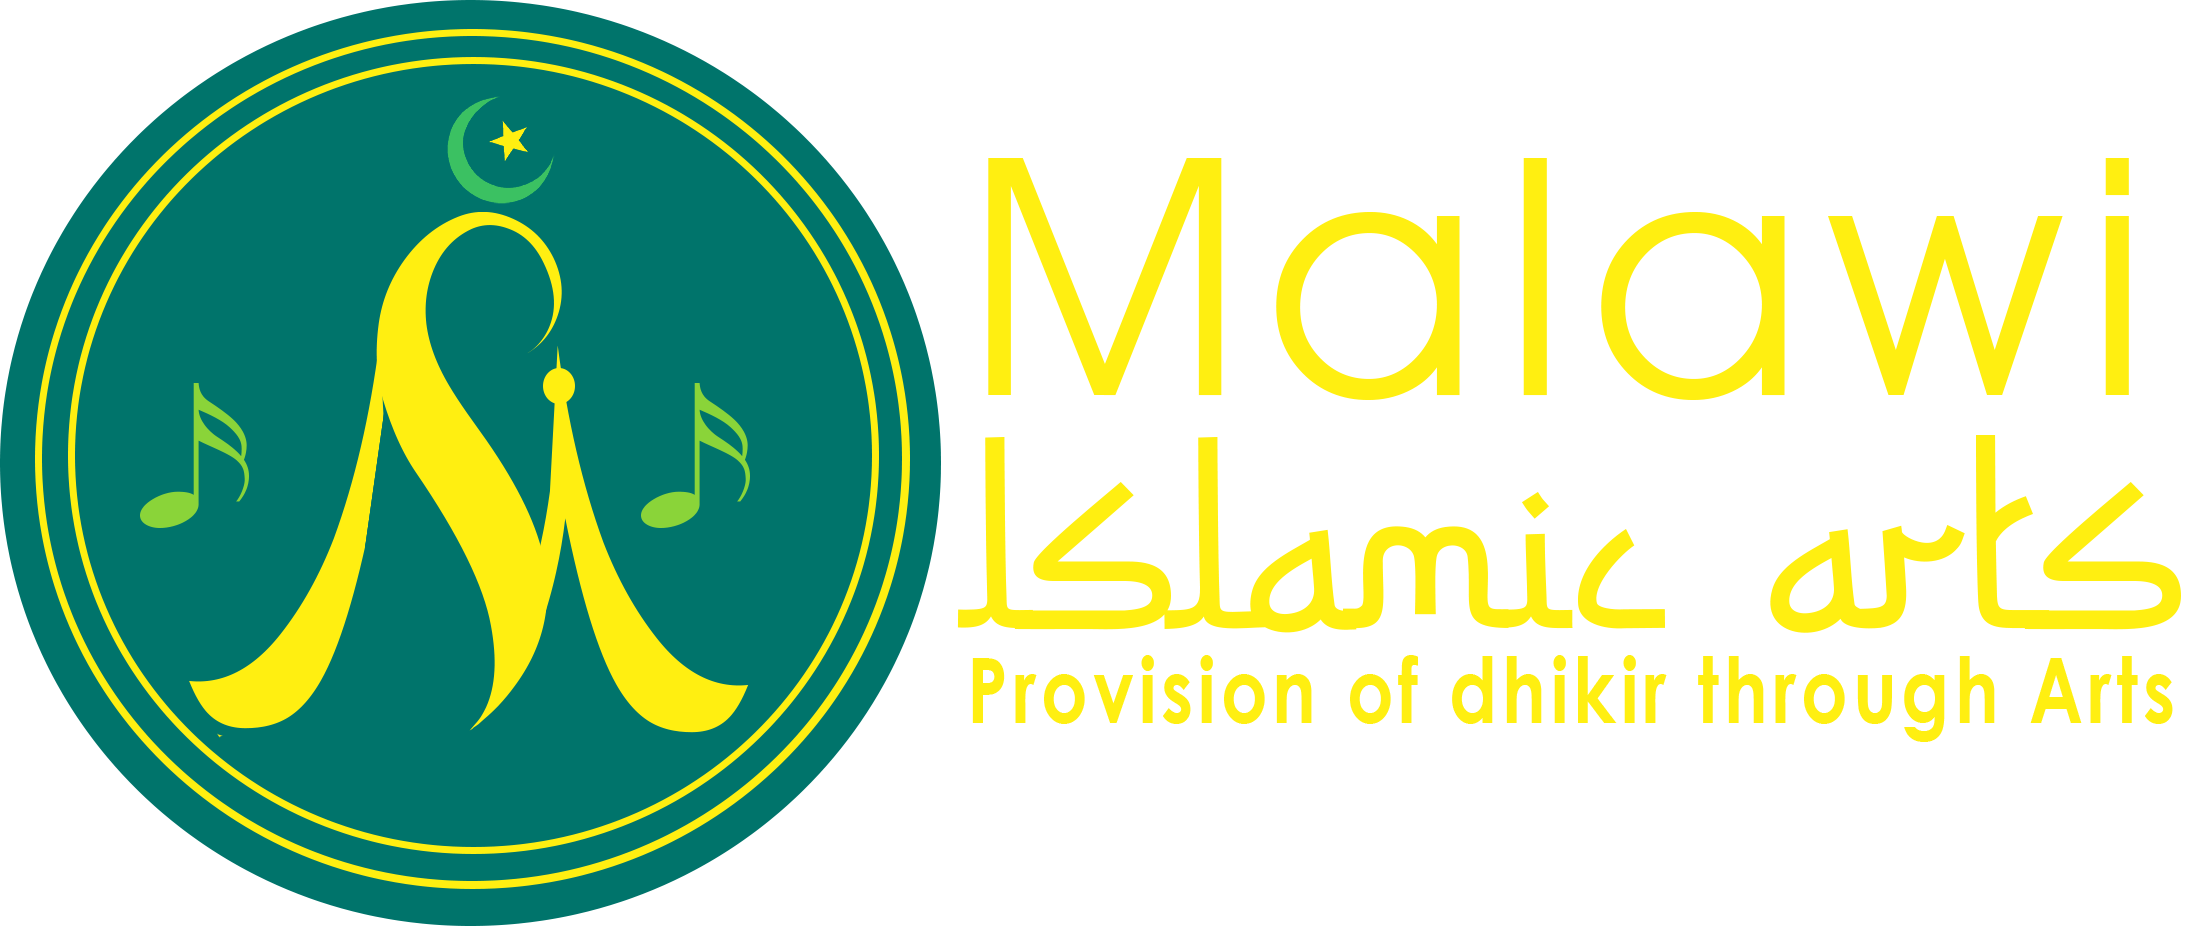 Malawi Islamic Arts